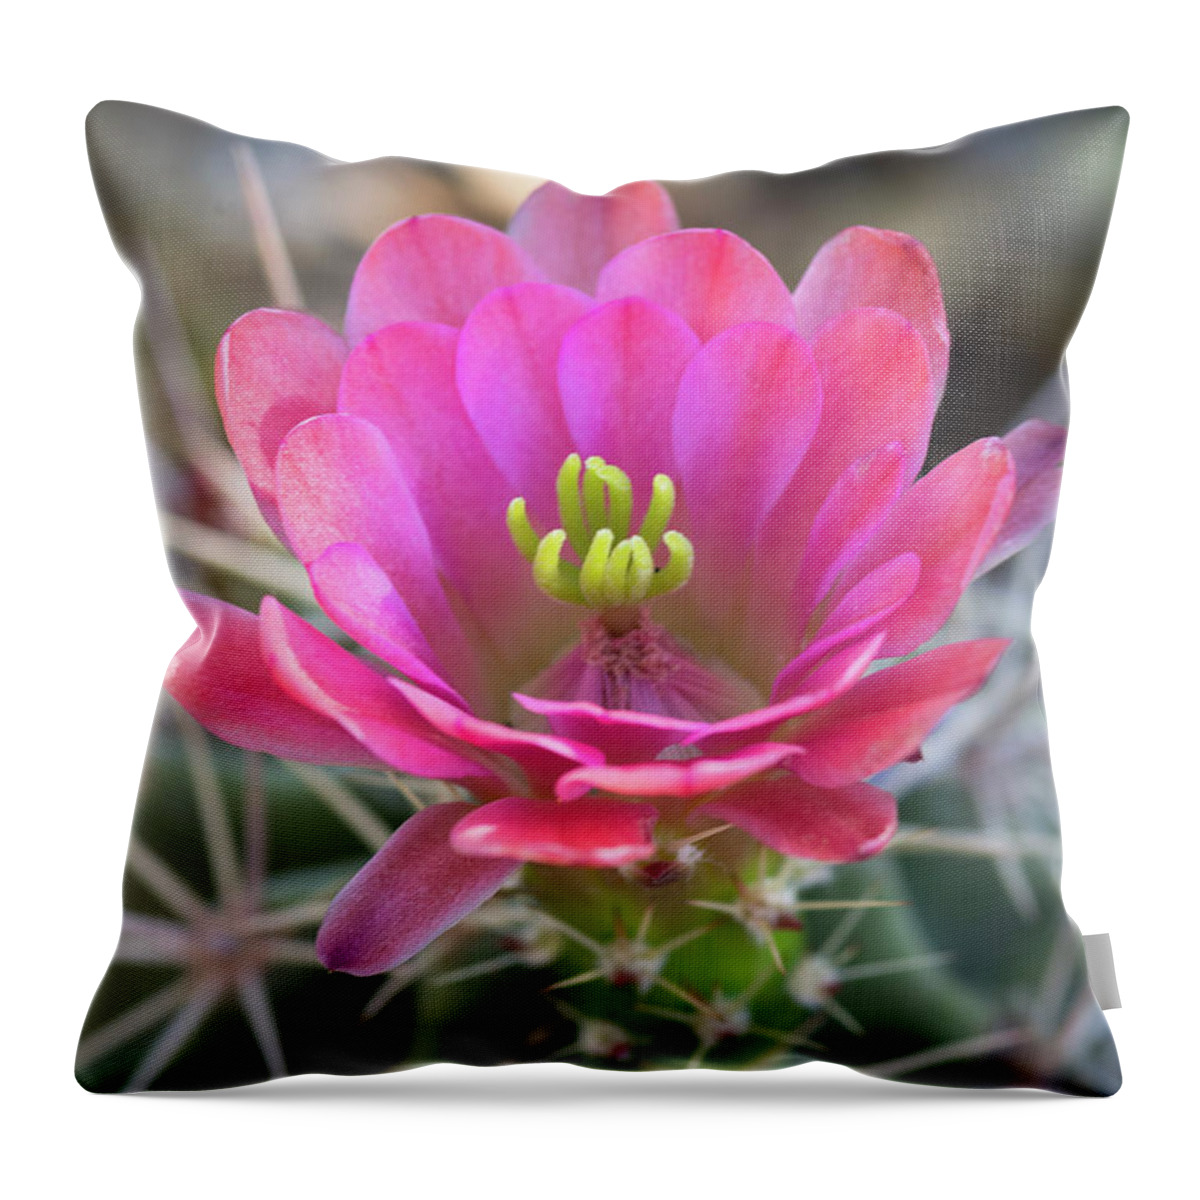 Arizona Throw Pillow featuring the photograph Pretty In Pink Hedgehog by Saija Lehtonen